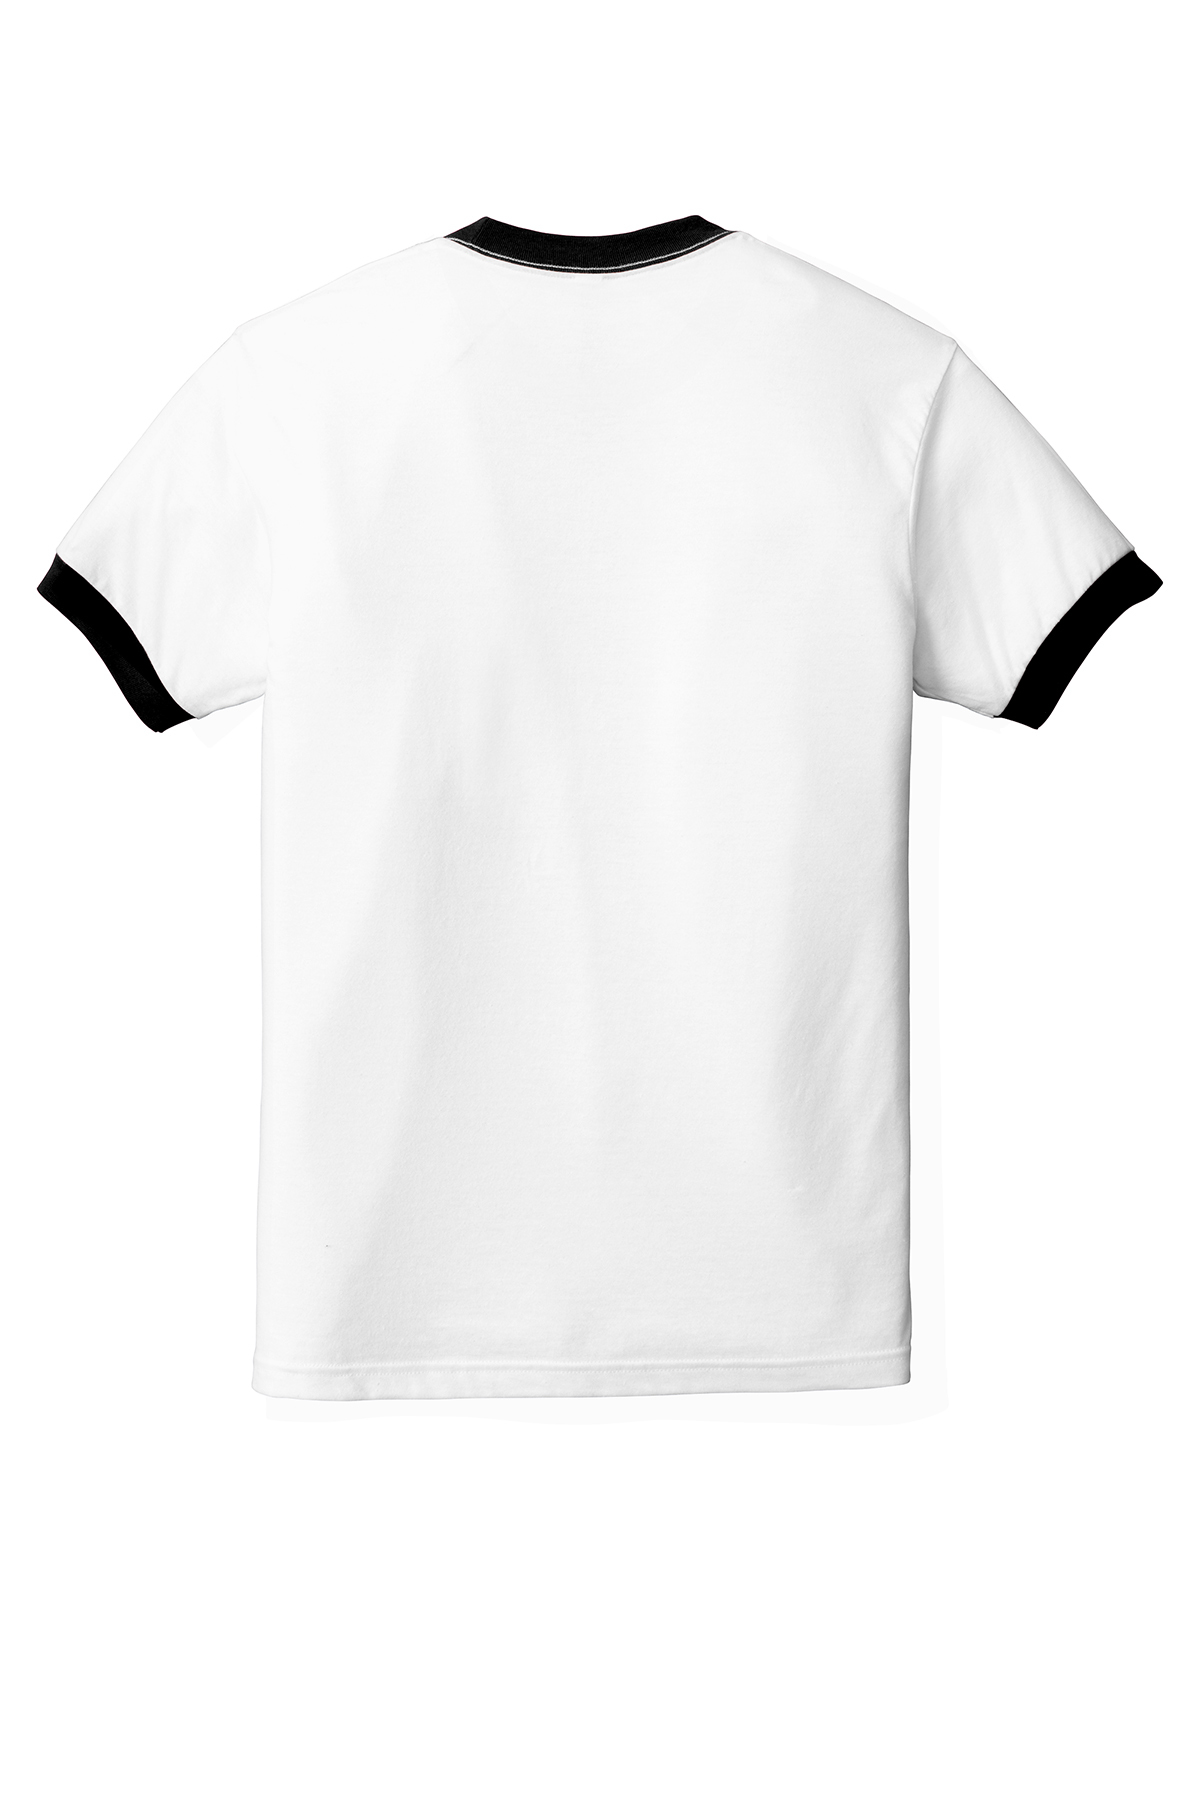 American Apparel Fine Jersey Ringer T-Shirt | Product | SanMar